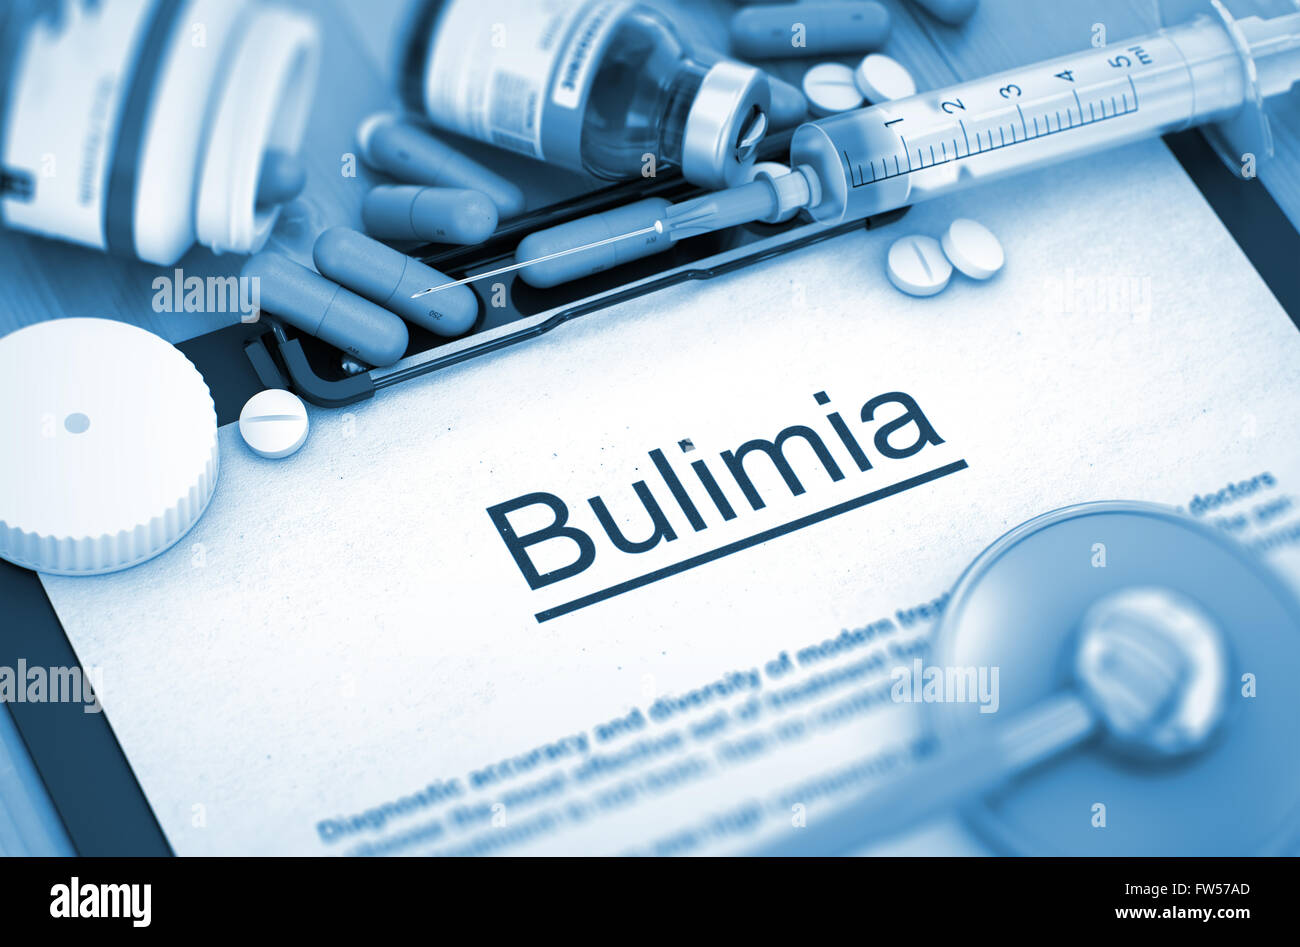 Bulimia. Medical Concept. Stock Photo